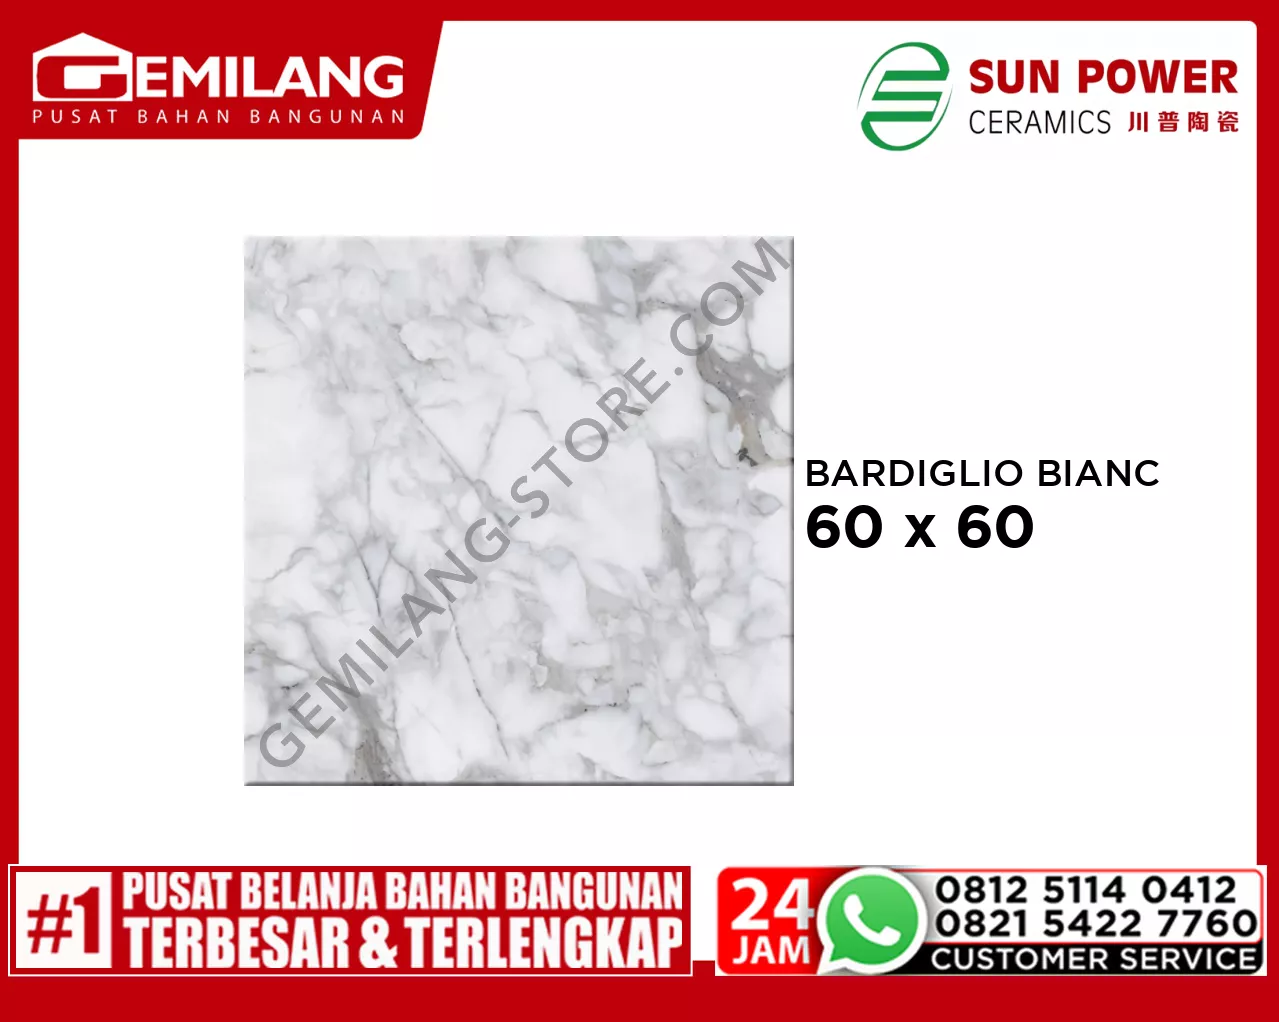 SUN POWER GRANIT BARDIGLIO BIANCO (GS661170) 60 x 60